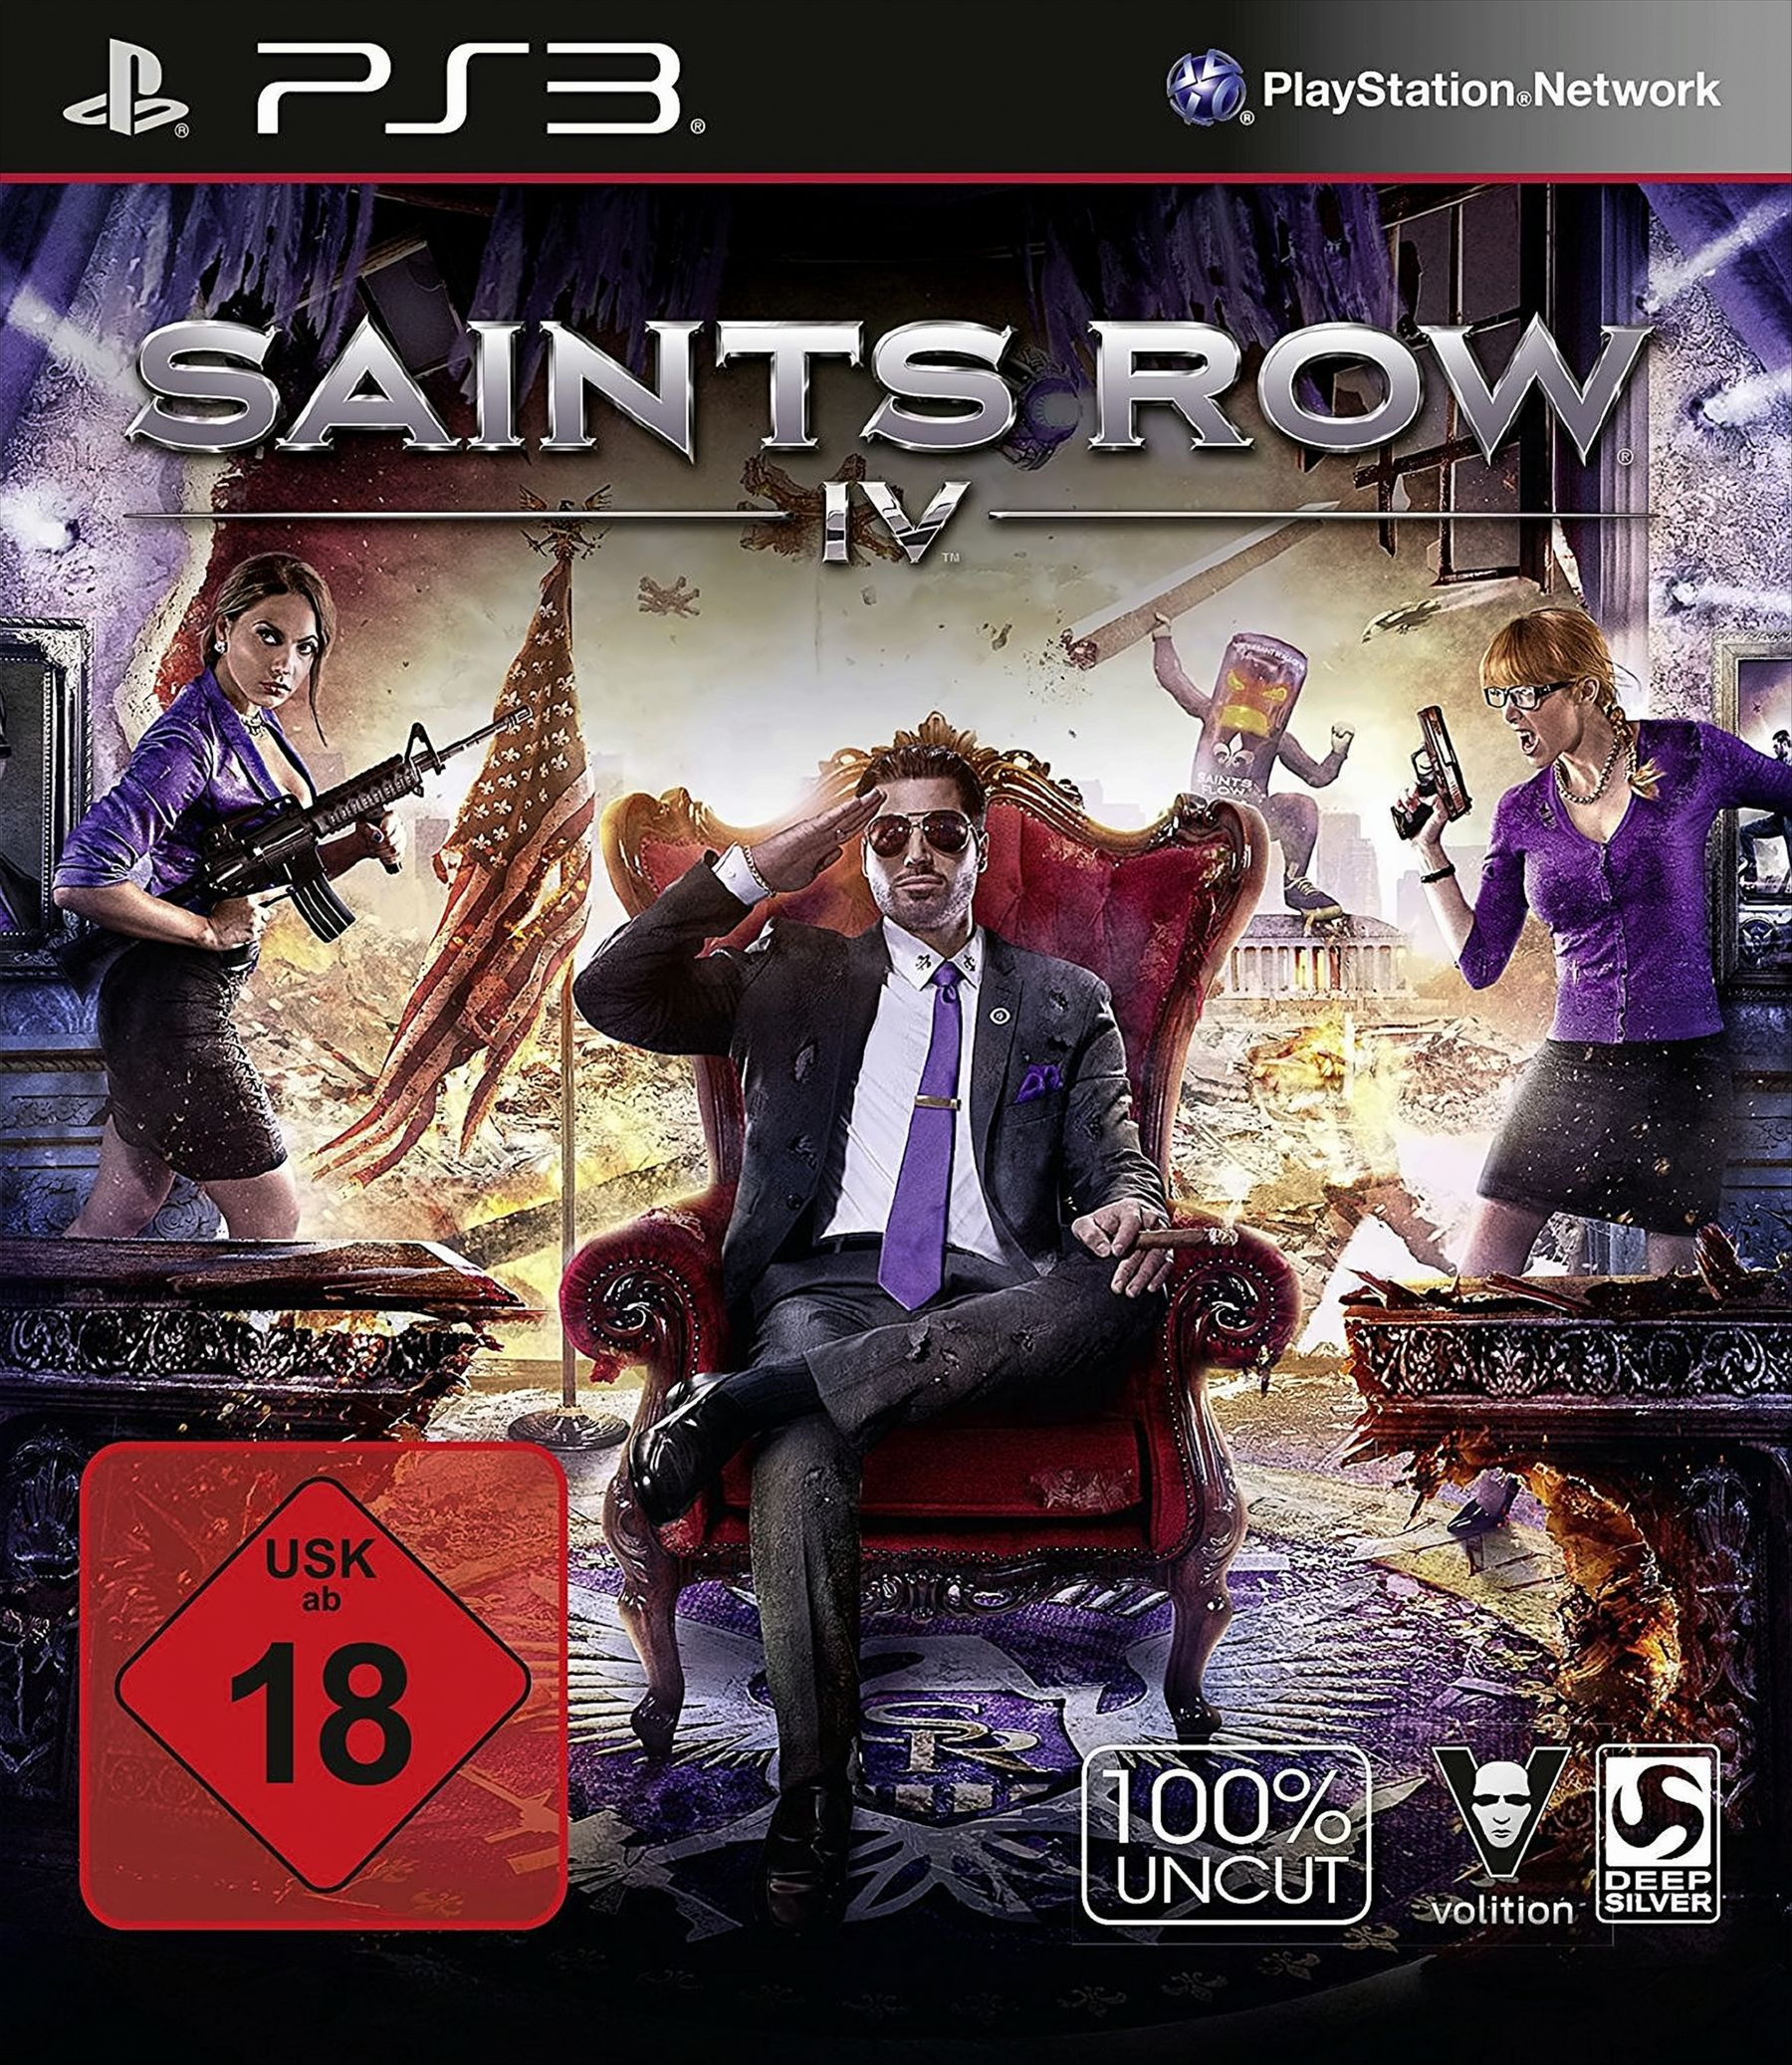 IV Row Saints - 3] [PlayStation